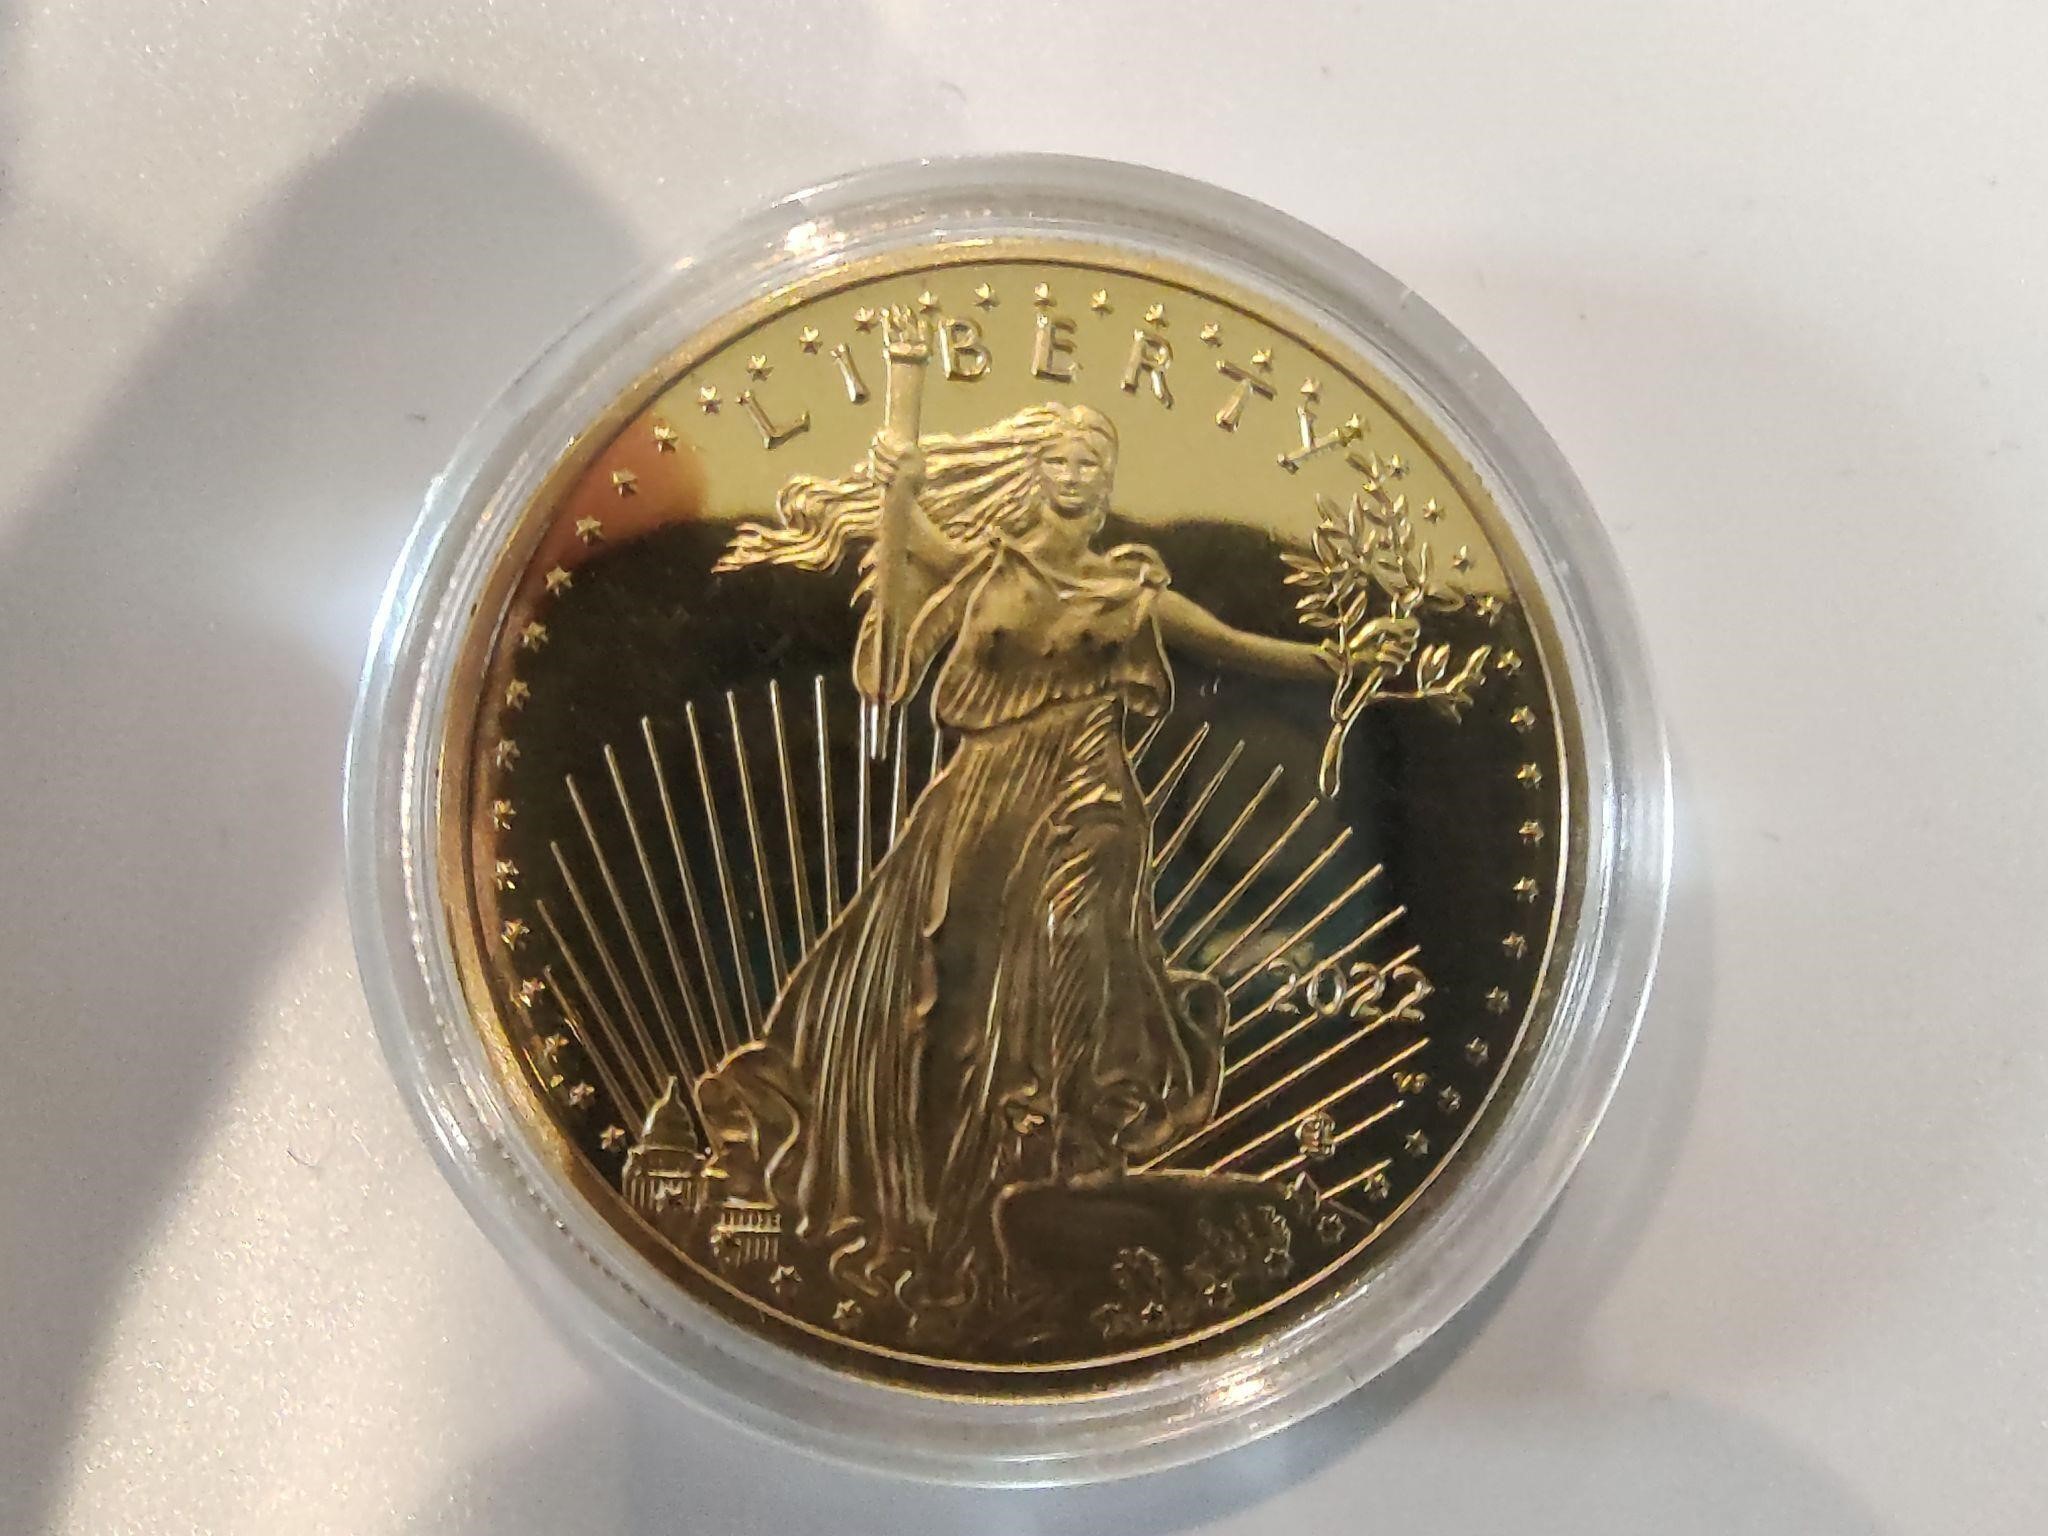 1 OZ Fine Gold $50.00 Coin